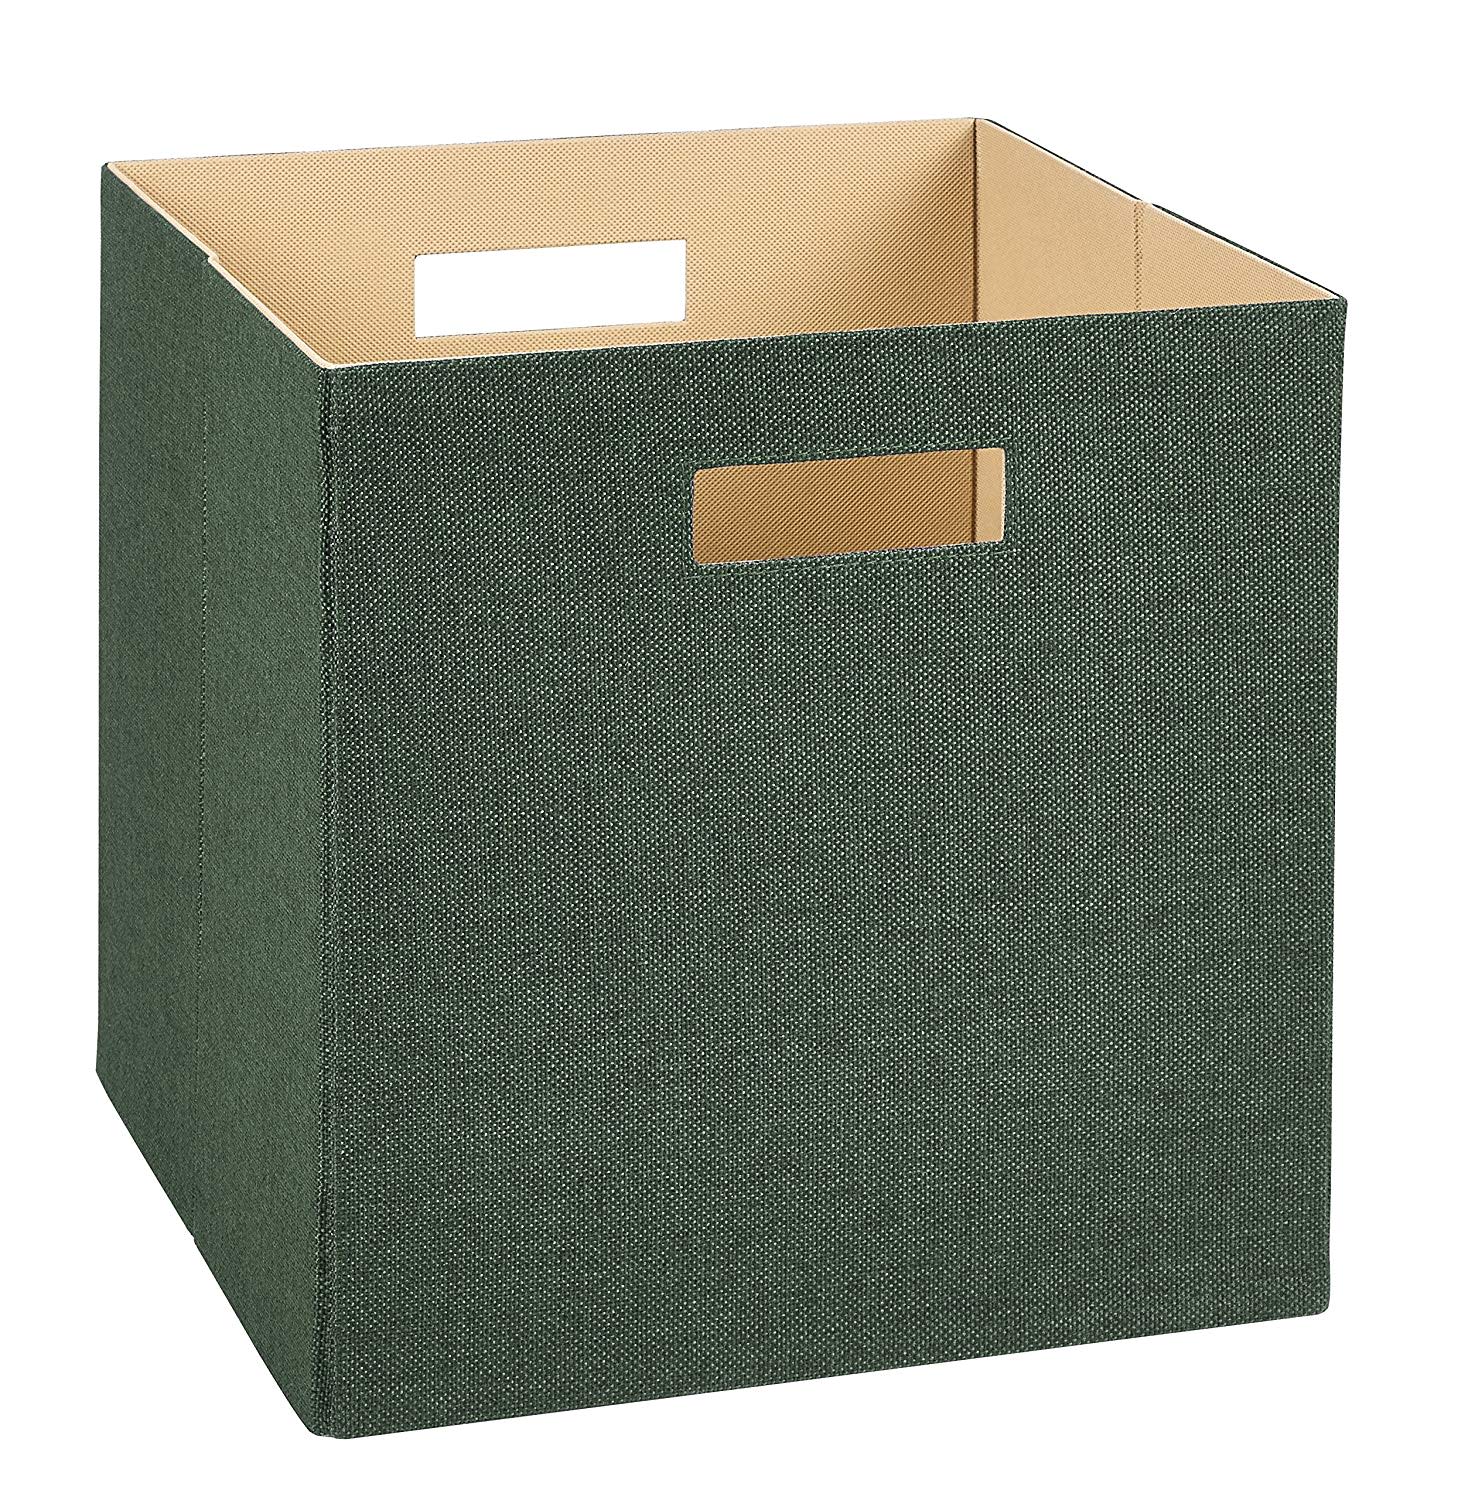 Where To Buy Storage Cubes For An Ikea Kallax Bookshelf Apartment Therapy